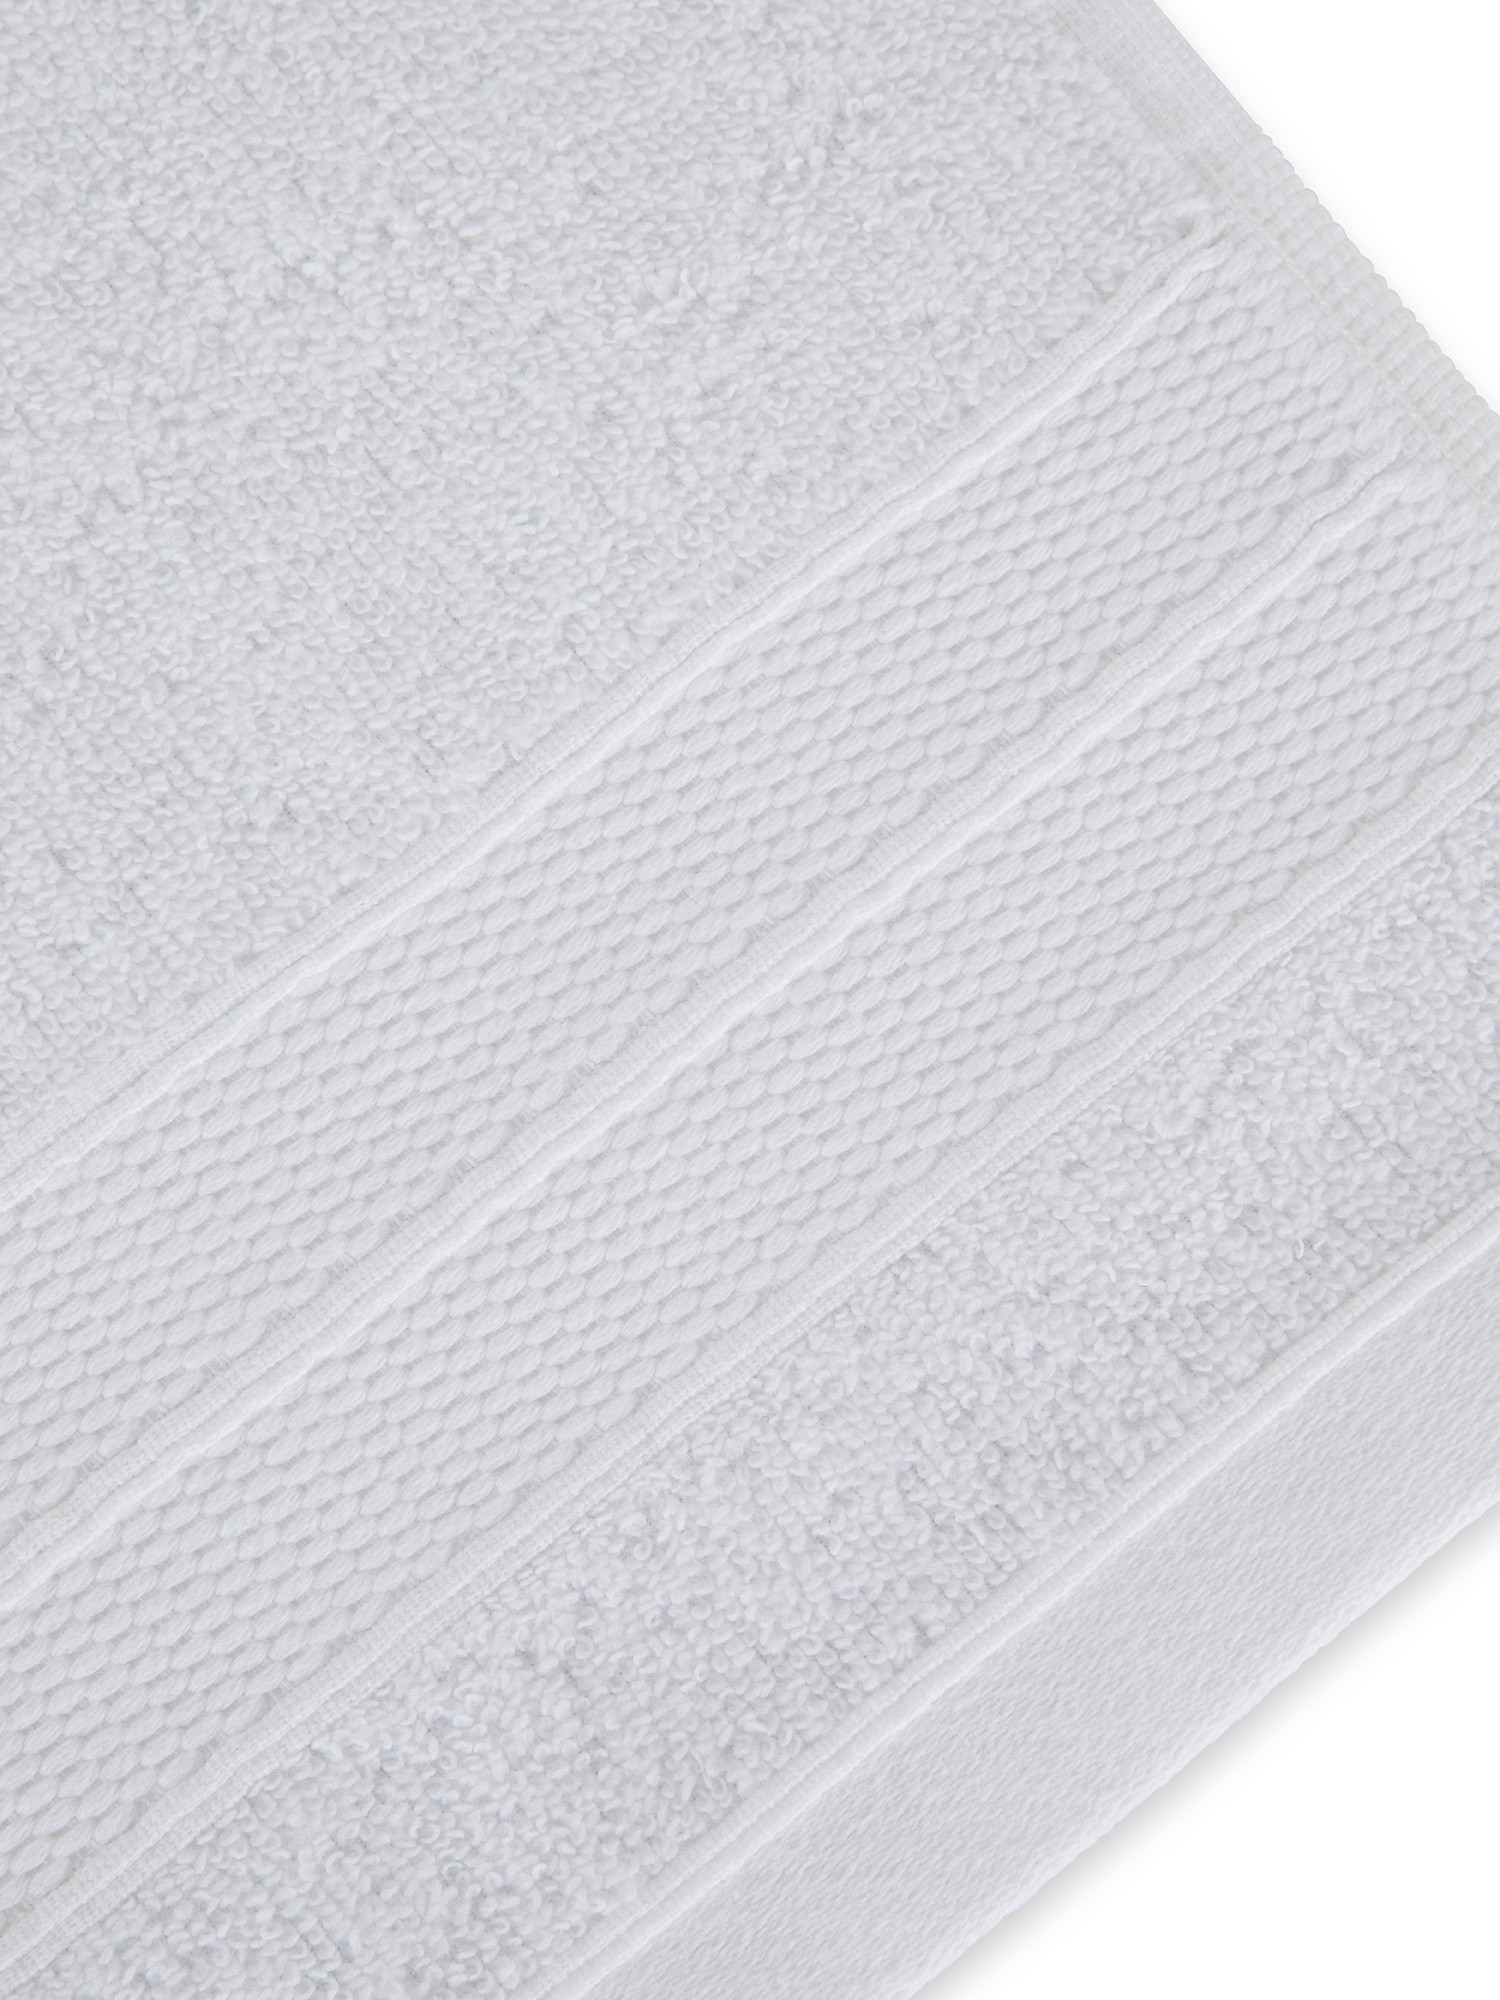 Asciugamano spugna di cotone tinta unita, Bianco, large image number 2